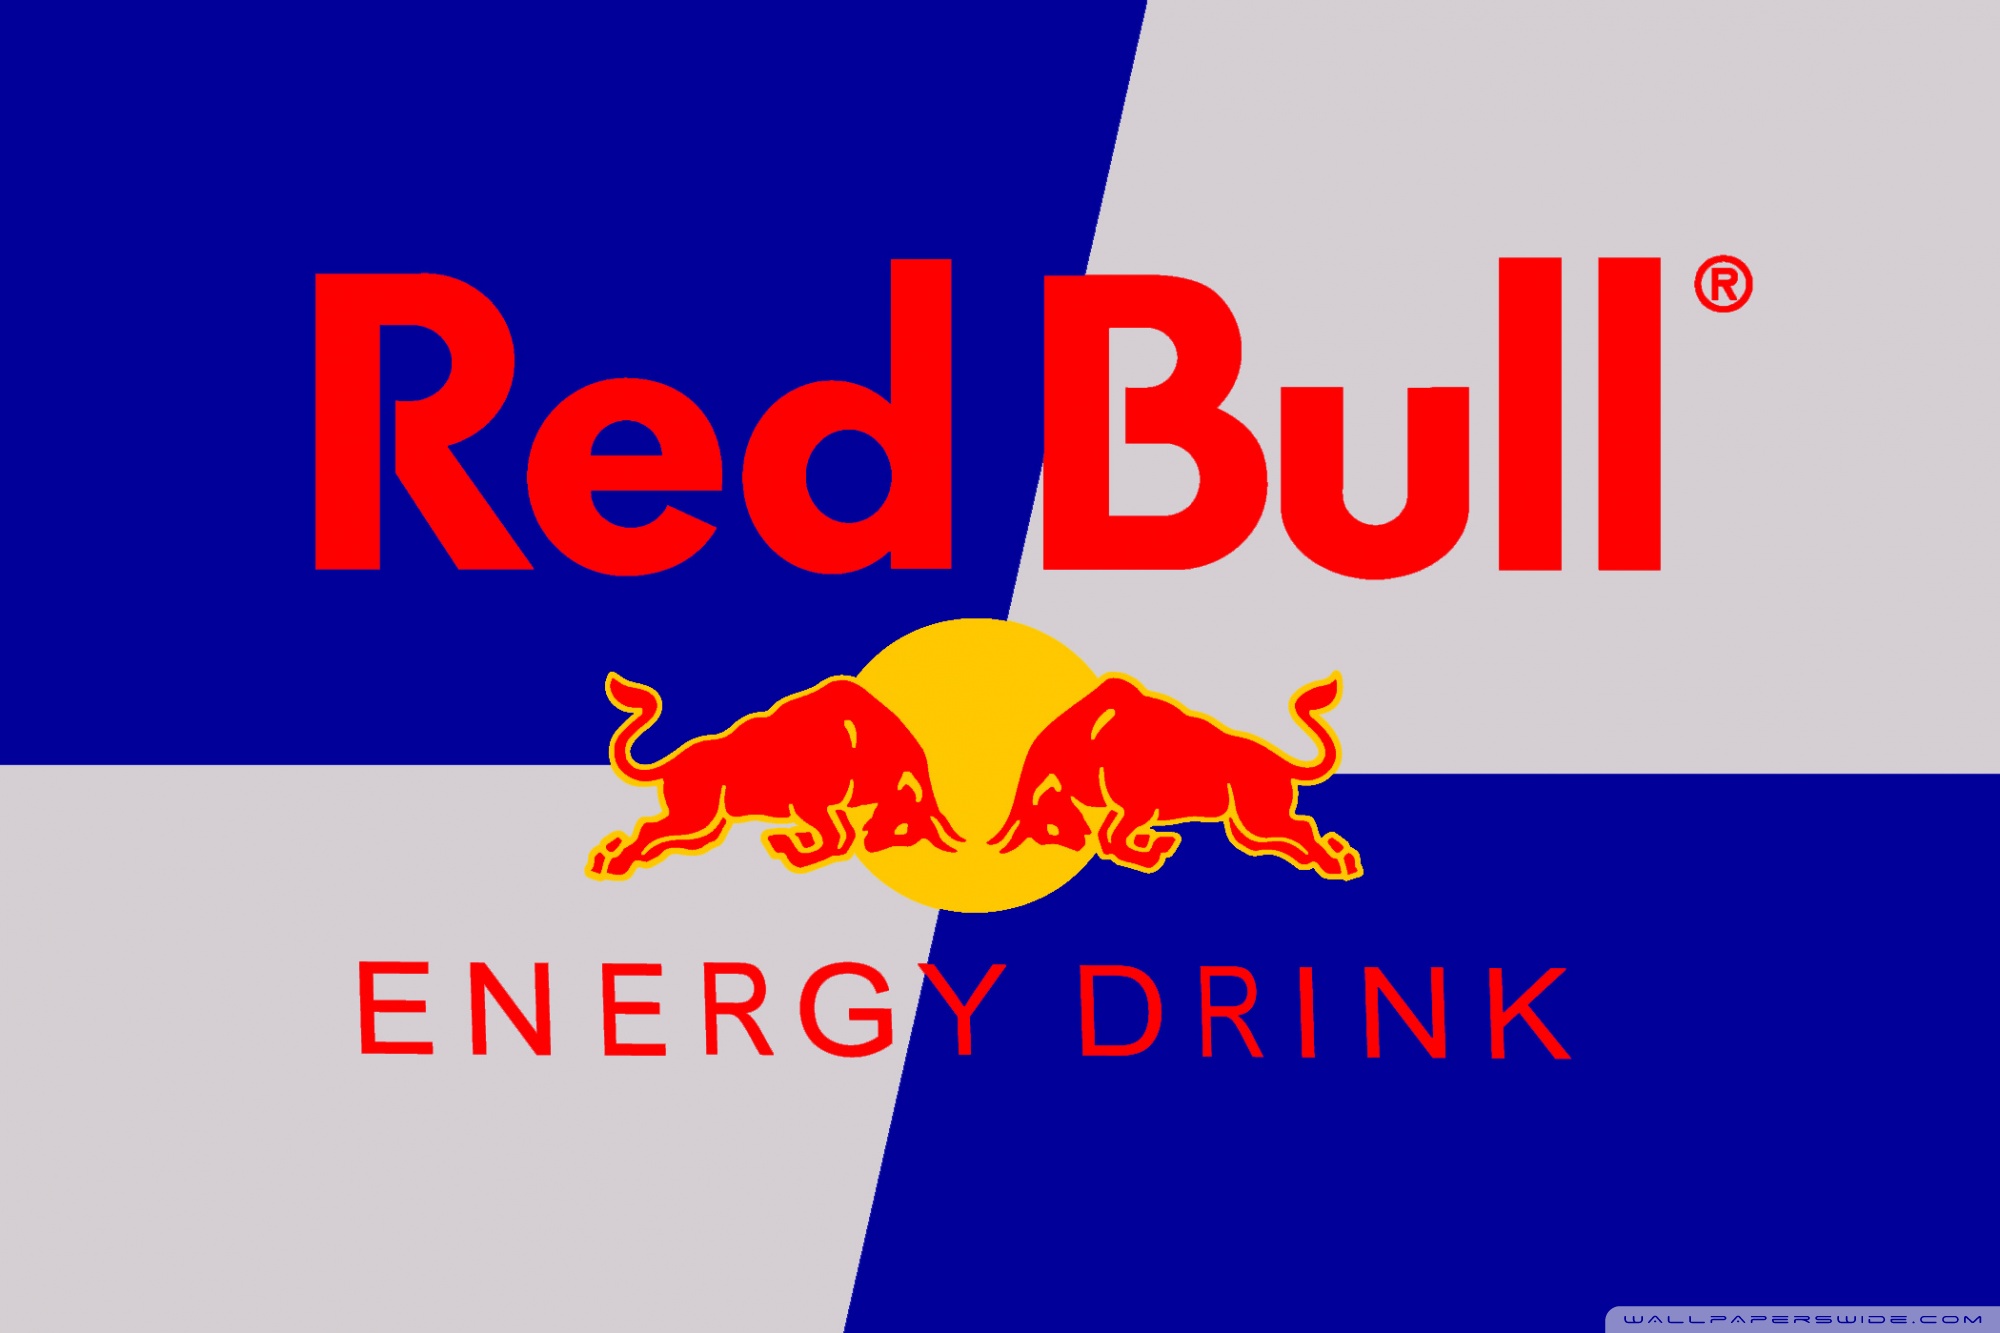 Red Bull Energy Drink Ultra Hd Desktop Background Wallpaper For 4k Uhd Tv Widescreen Ultrawide Desktop Laptop Tablet Smartphone